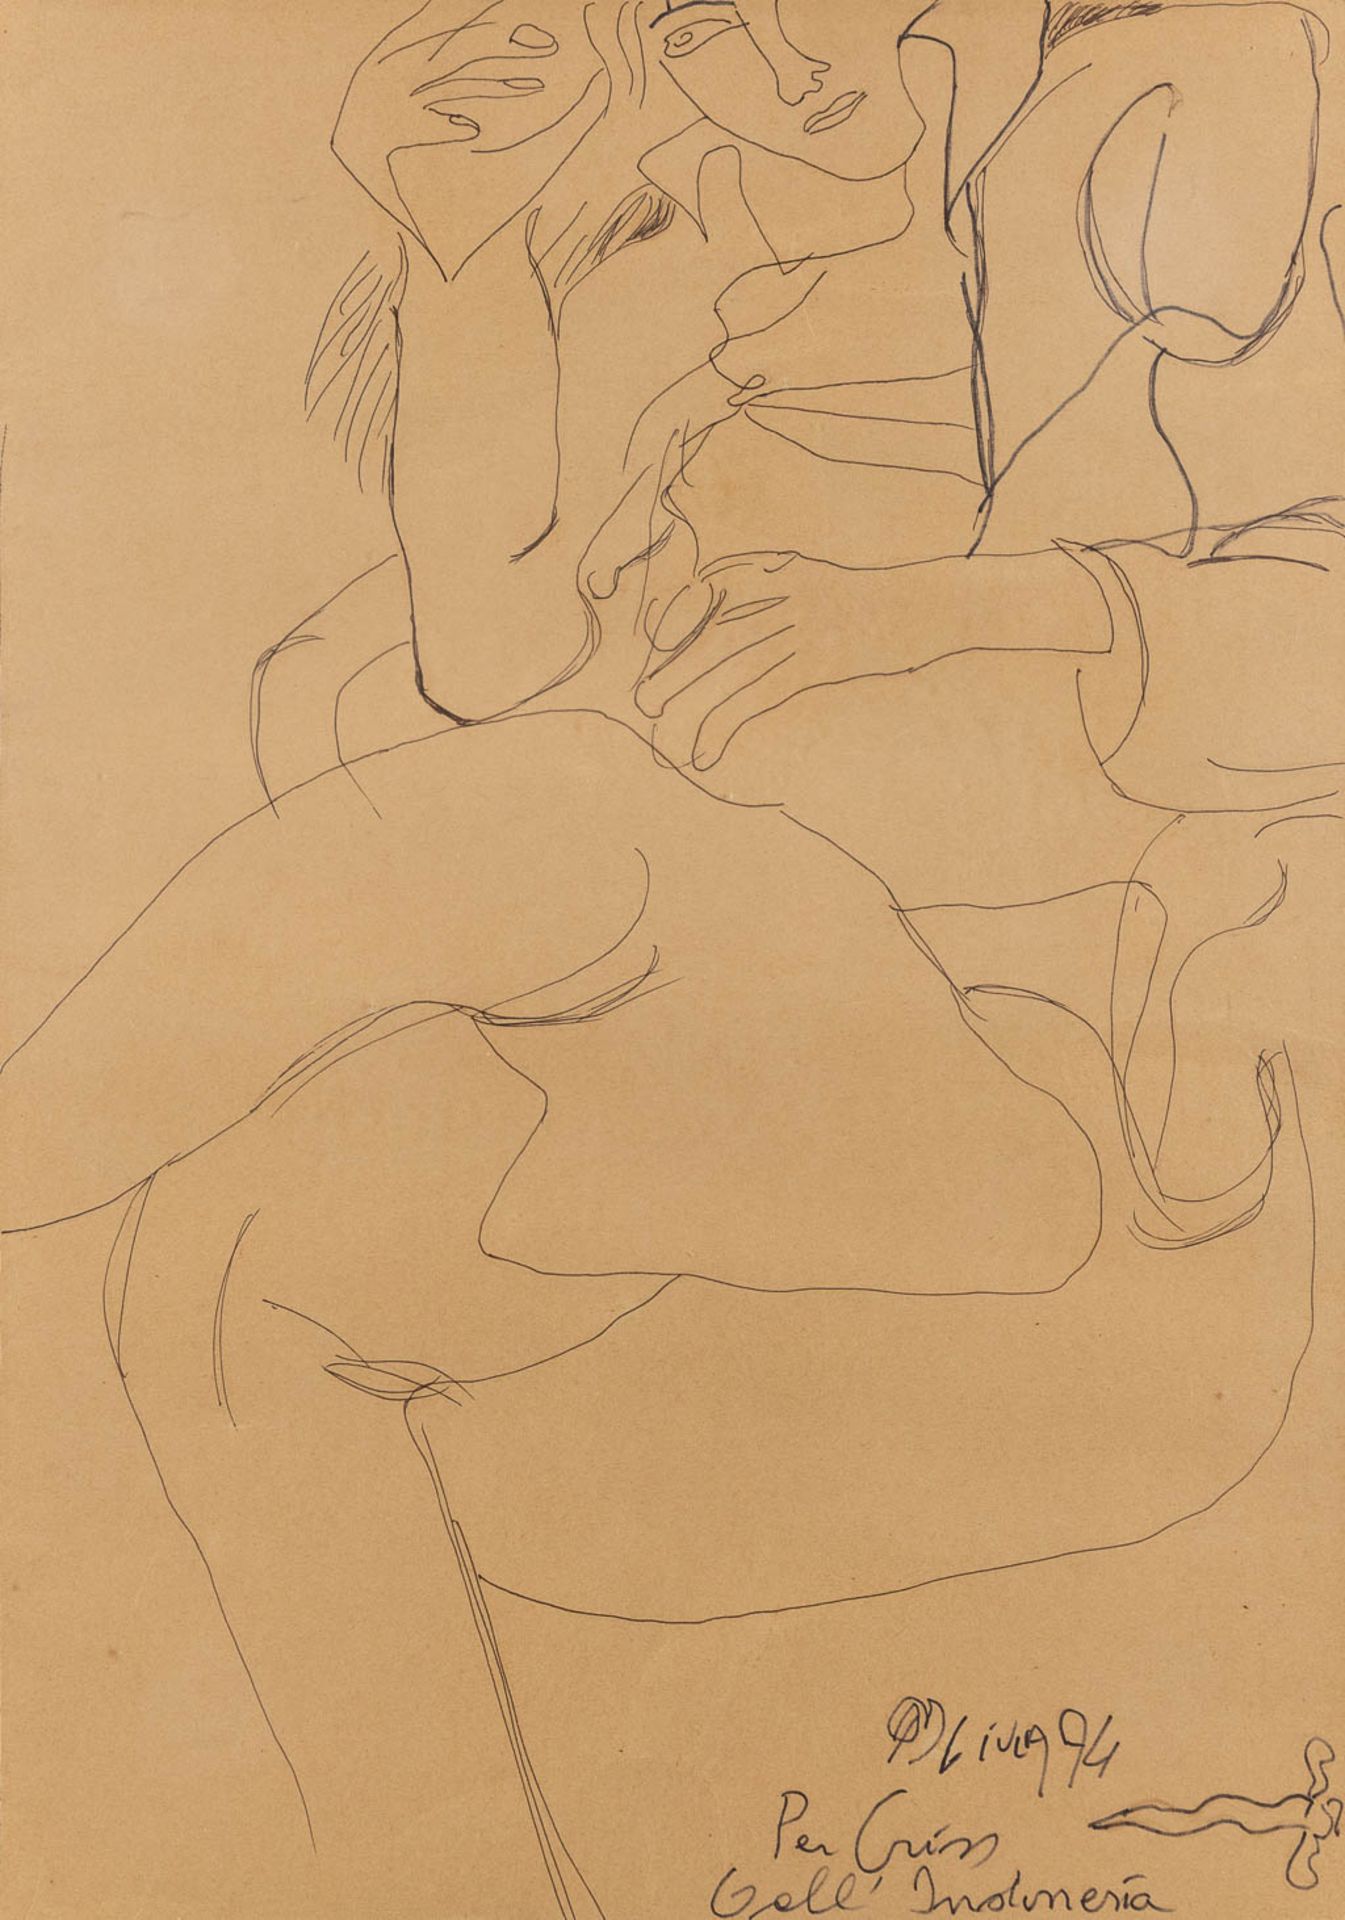 Livia CANESTRARO (1936) 'Per Criss' a drawing, pen on paper. 1974. (W:34 x H:50 cm)